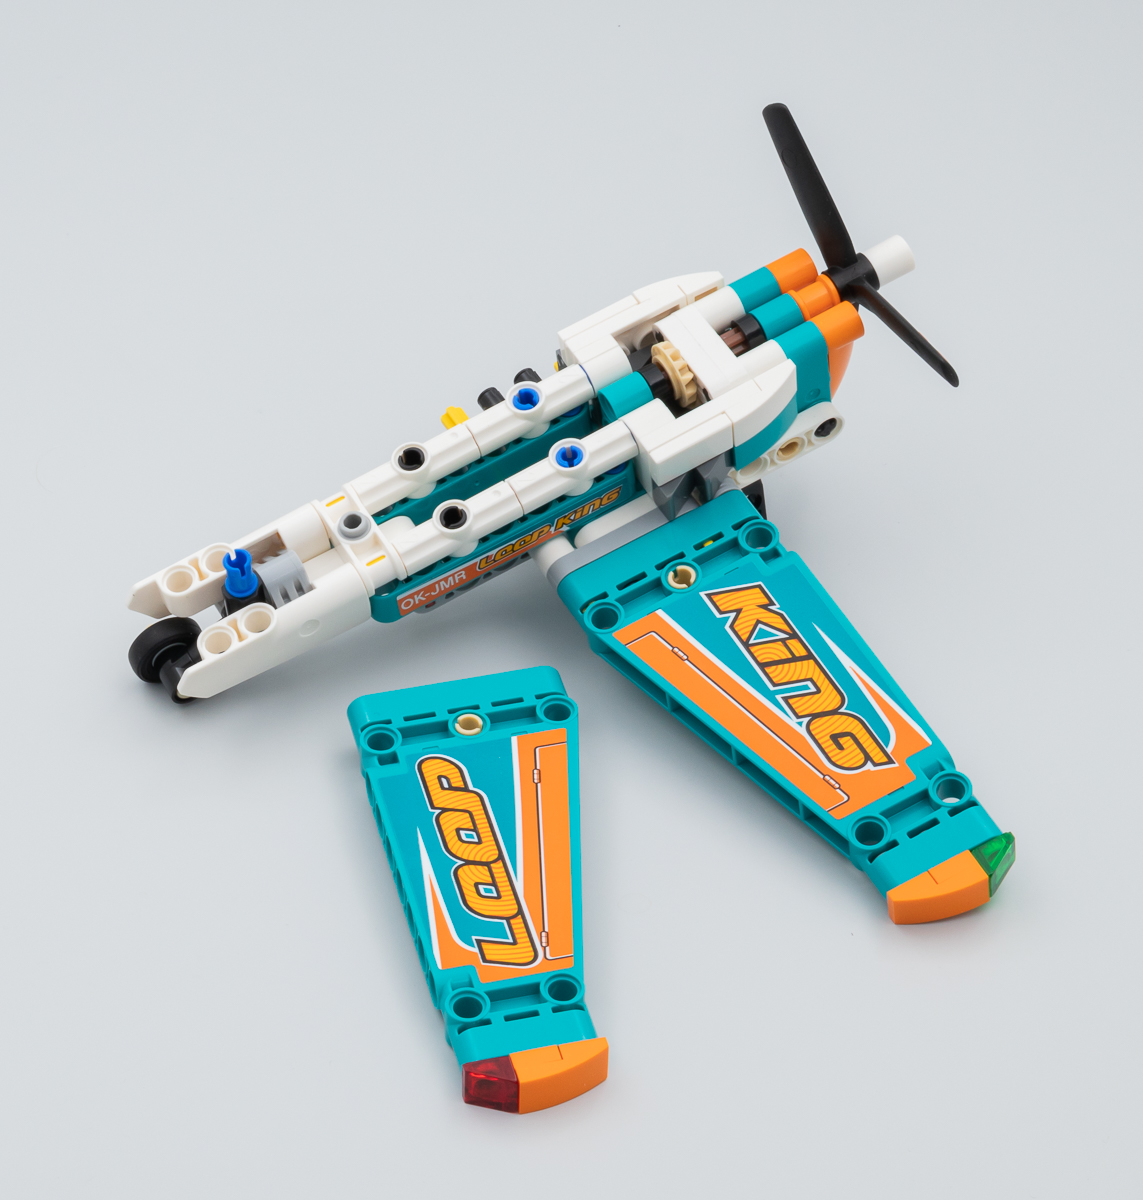 LEGO 42117 Race Plane - LEGO Technic - BricksDirect Condition New.